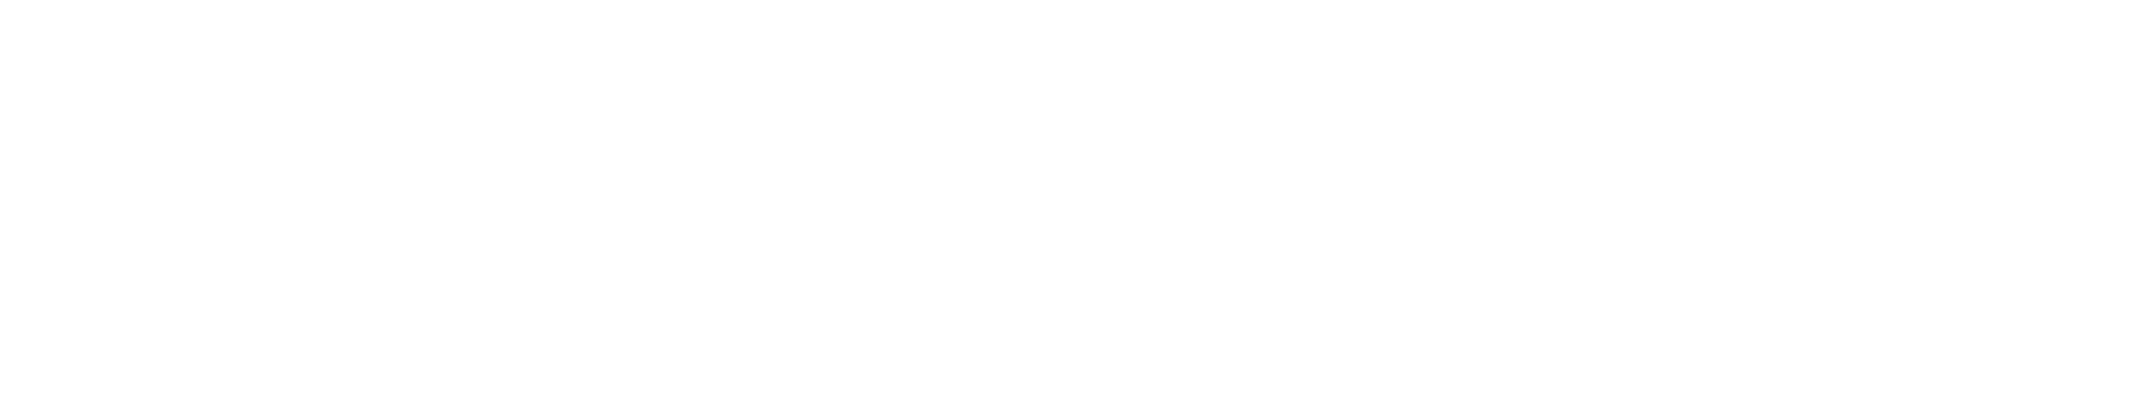 global-certs-logo-white